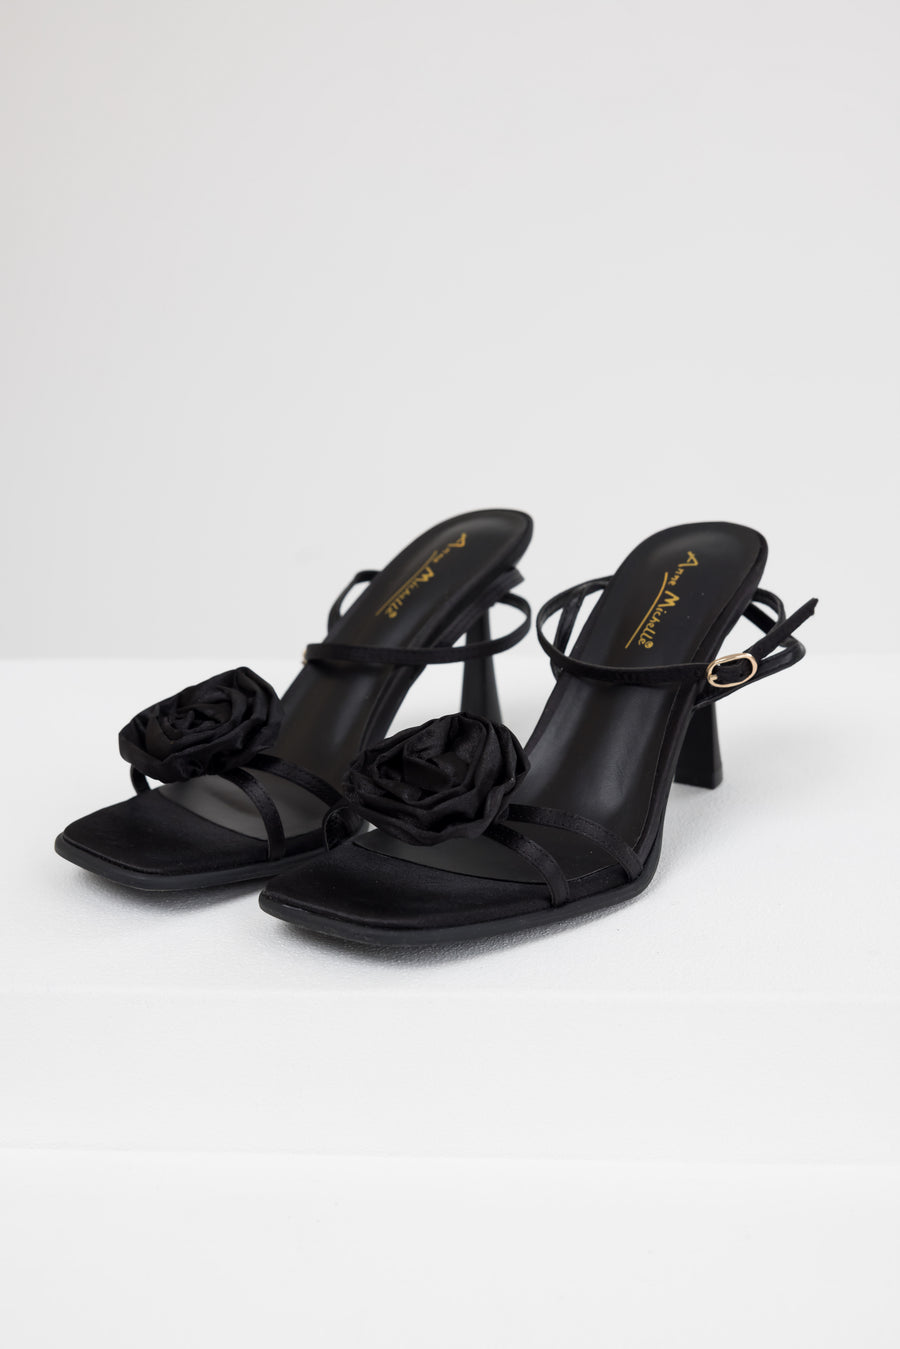 Black Satin Flower Strap Dress Heels